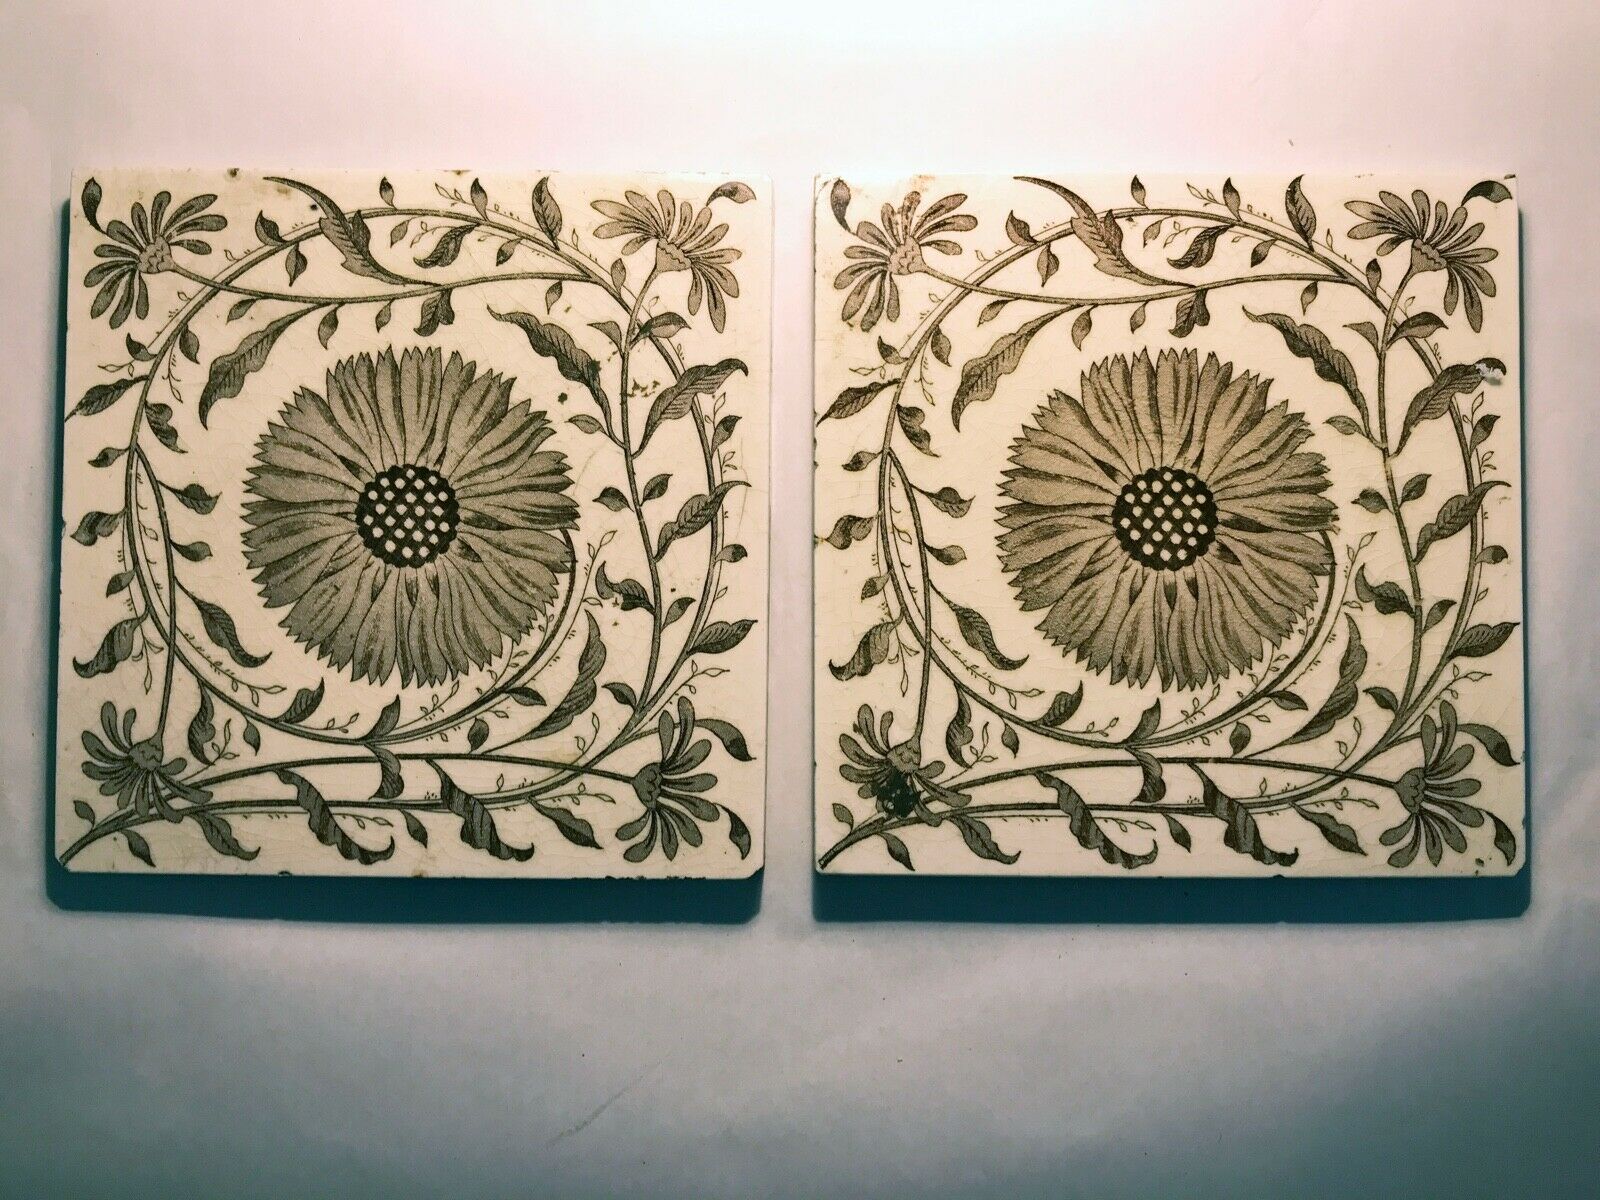 Vintage Antique Mintons Transfer Printed Aesthetic Movement Sunflower Tiles x 2